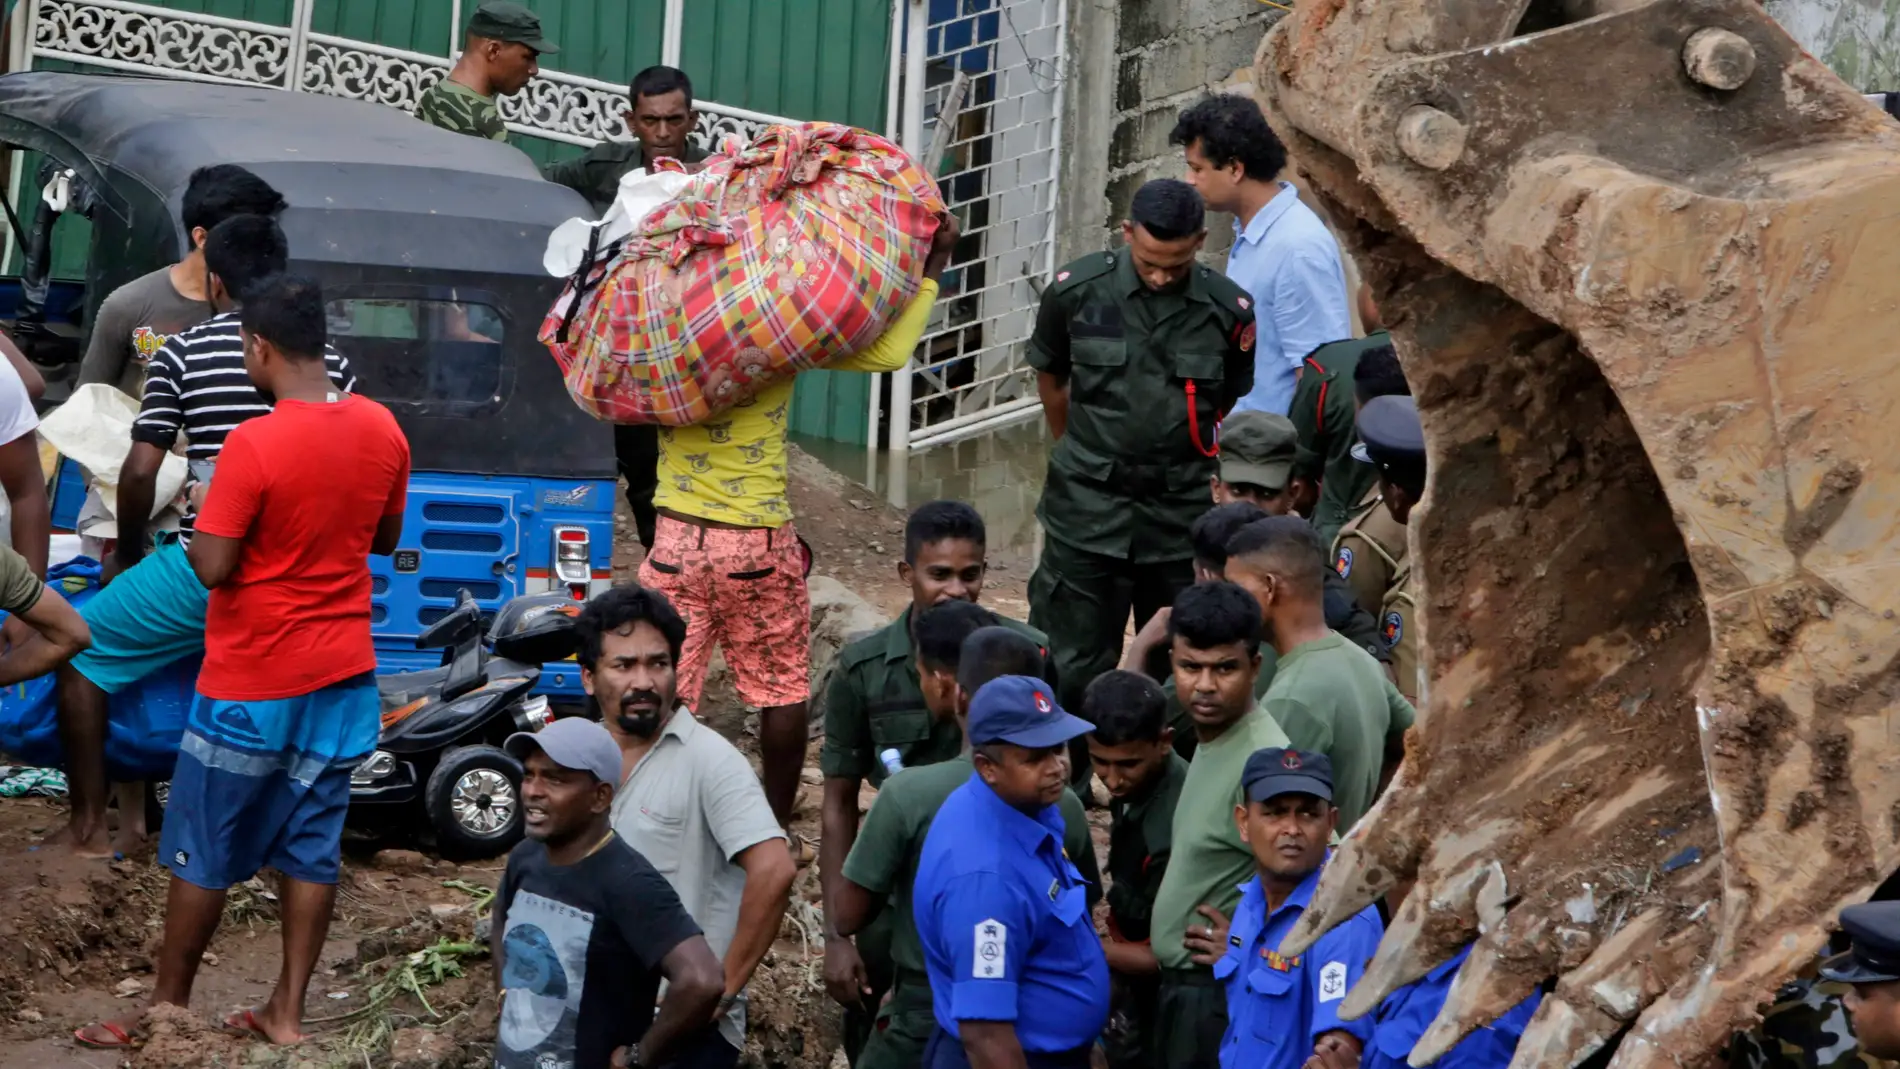 Al menos 16 personas han muerto sepultadas por toneladas de basura en Sri Lanka